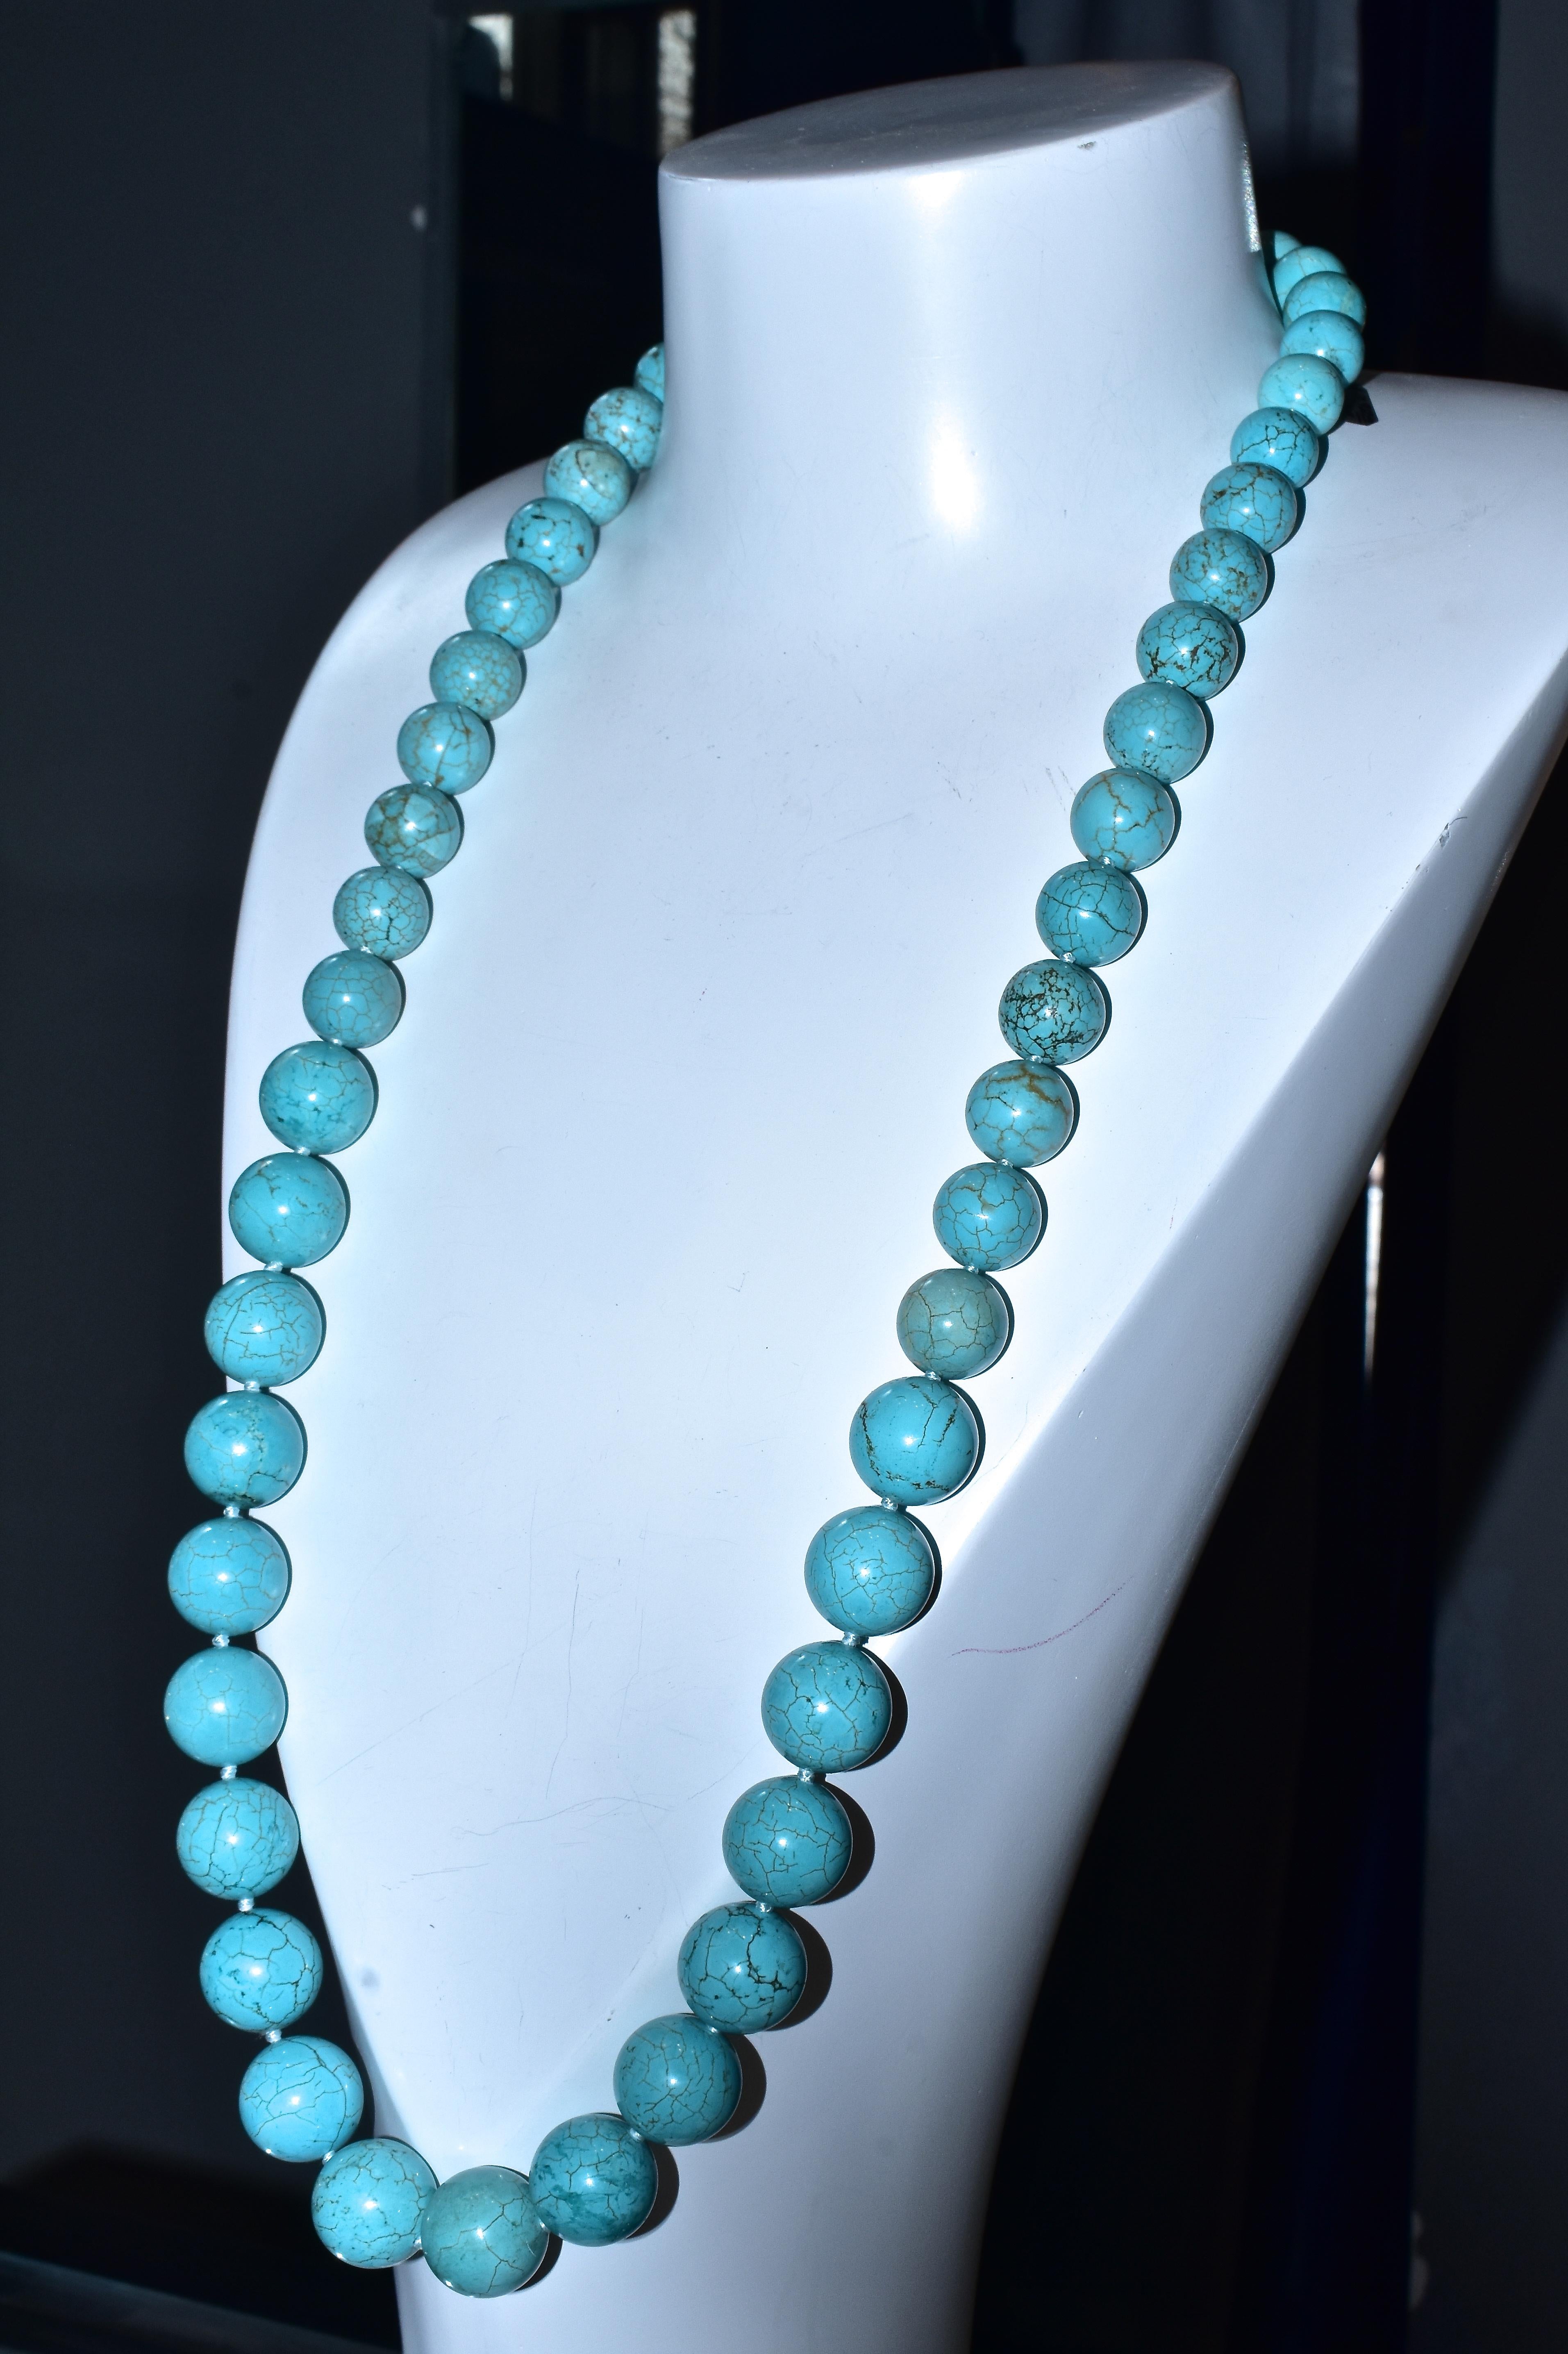 jumbo bead necklace